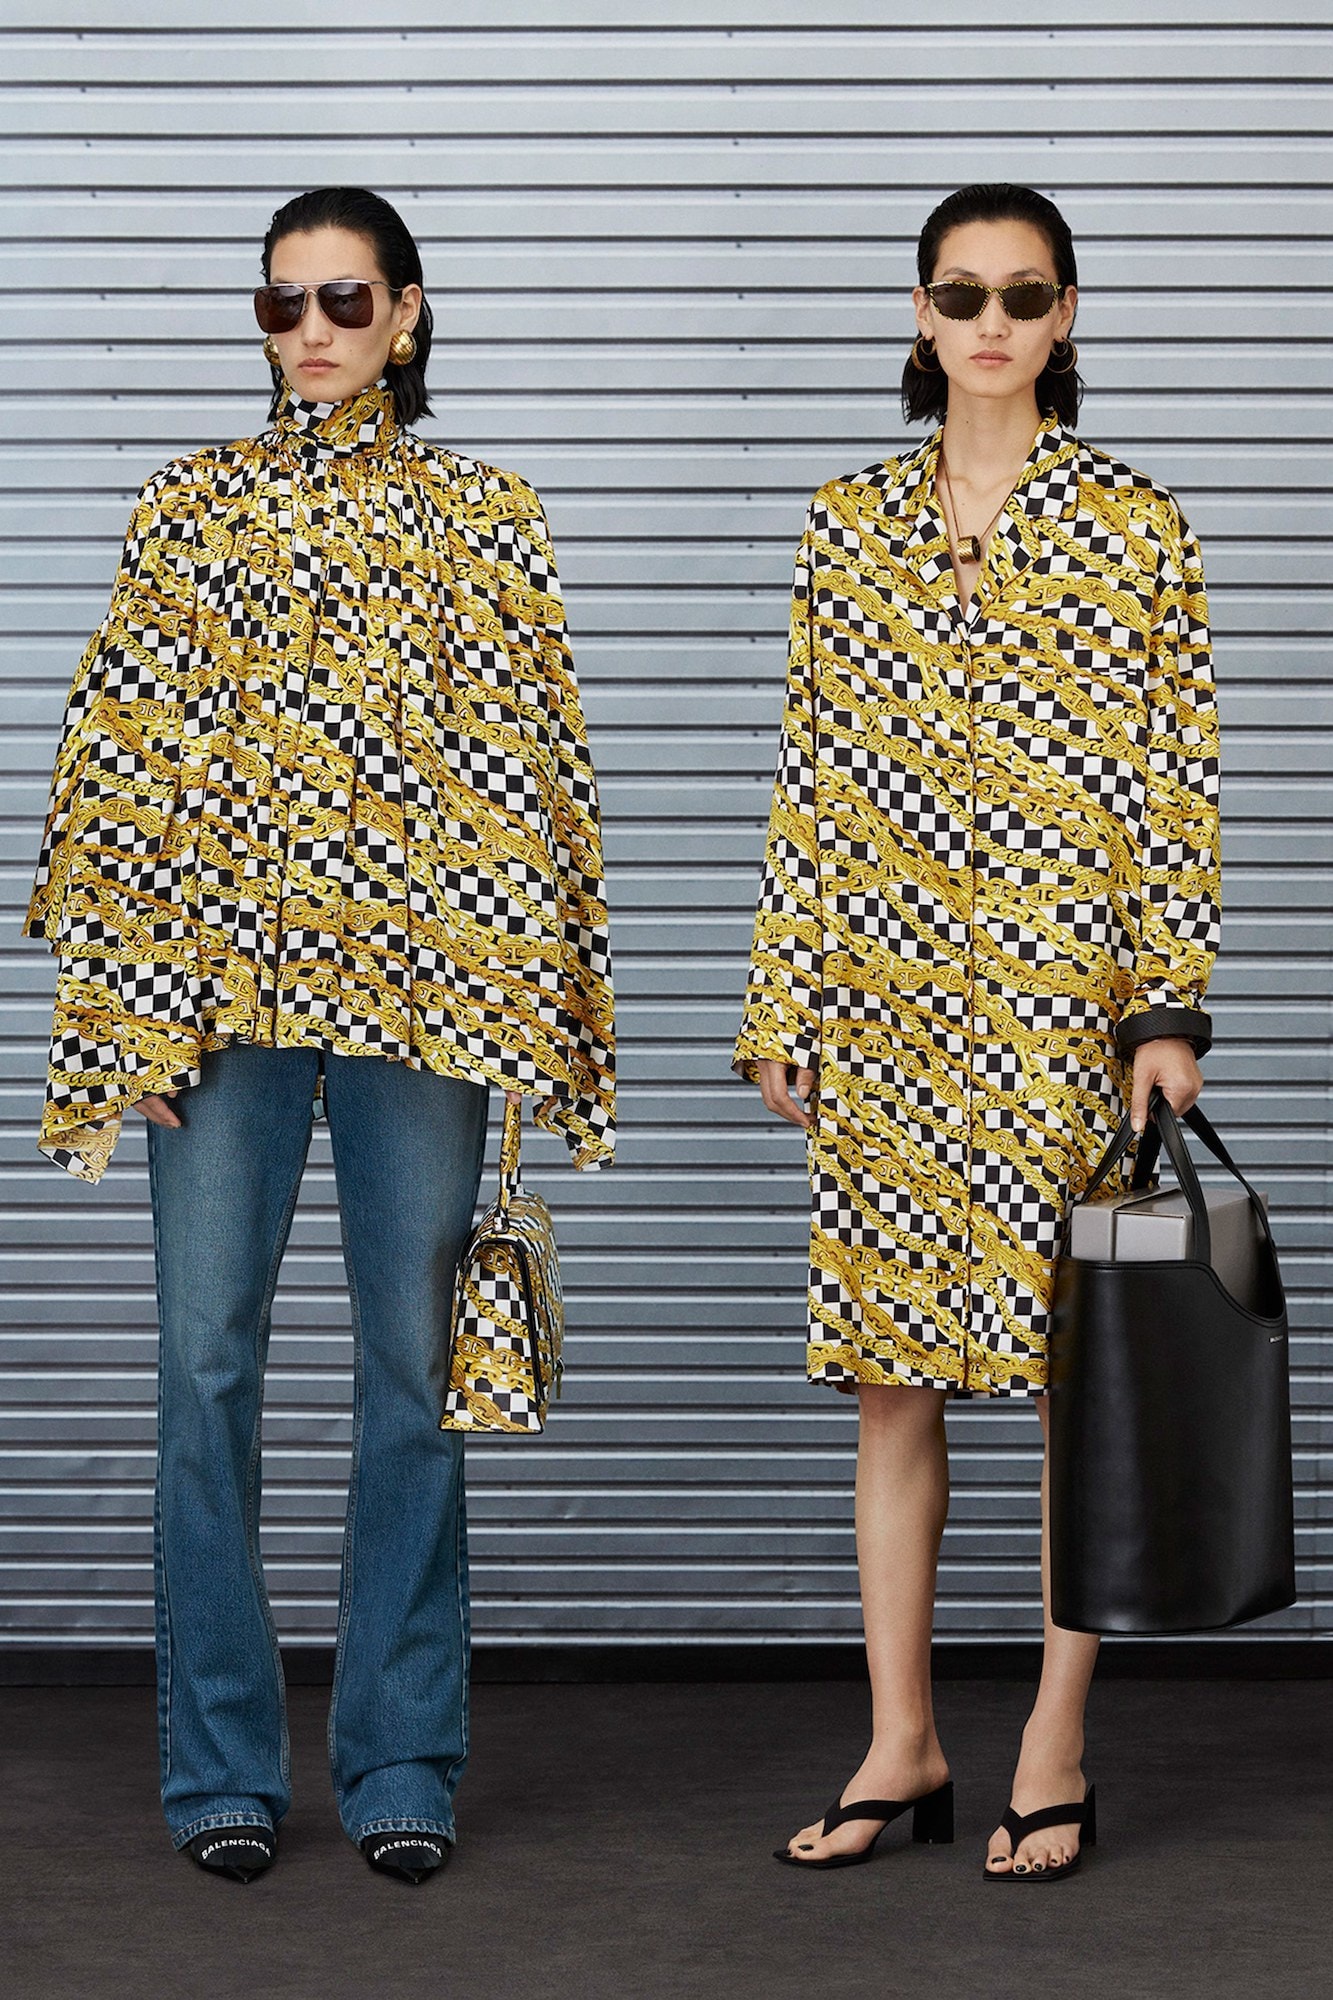 Balenciaga Resort 2020 Lookbook Collection Demna Gvasalia Release Layering Suits Blazer Coats